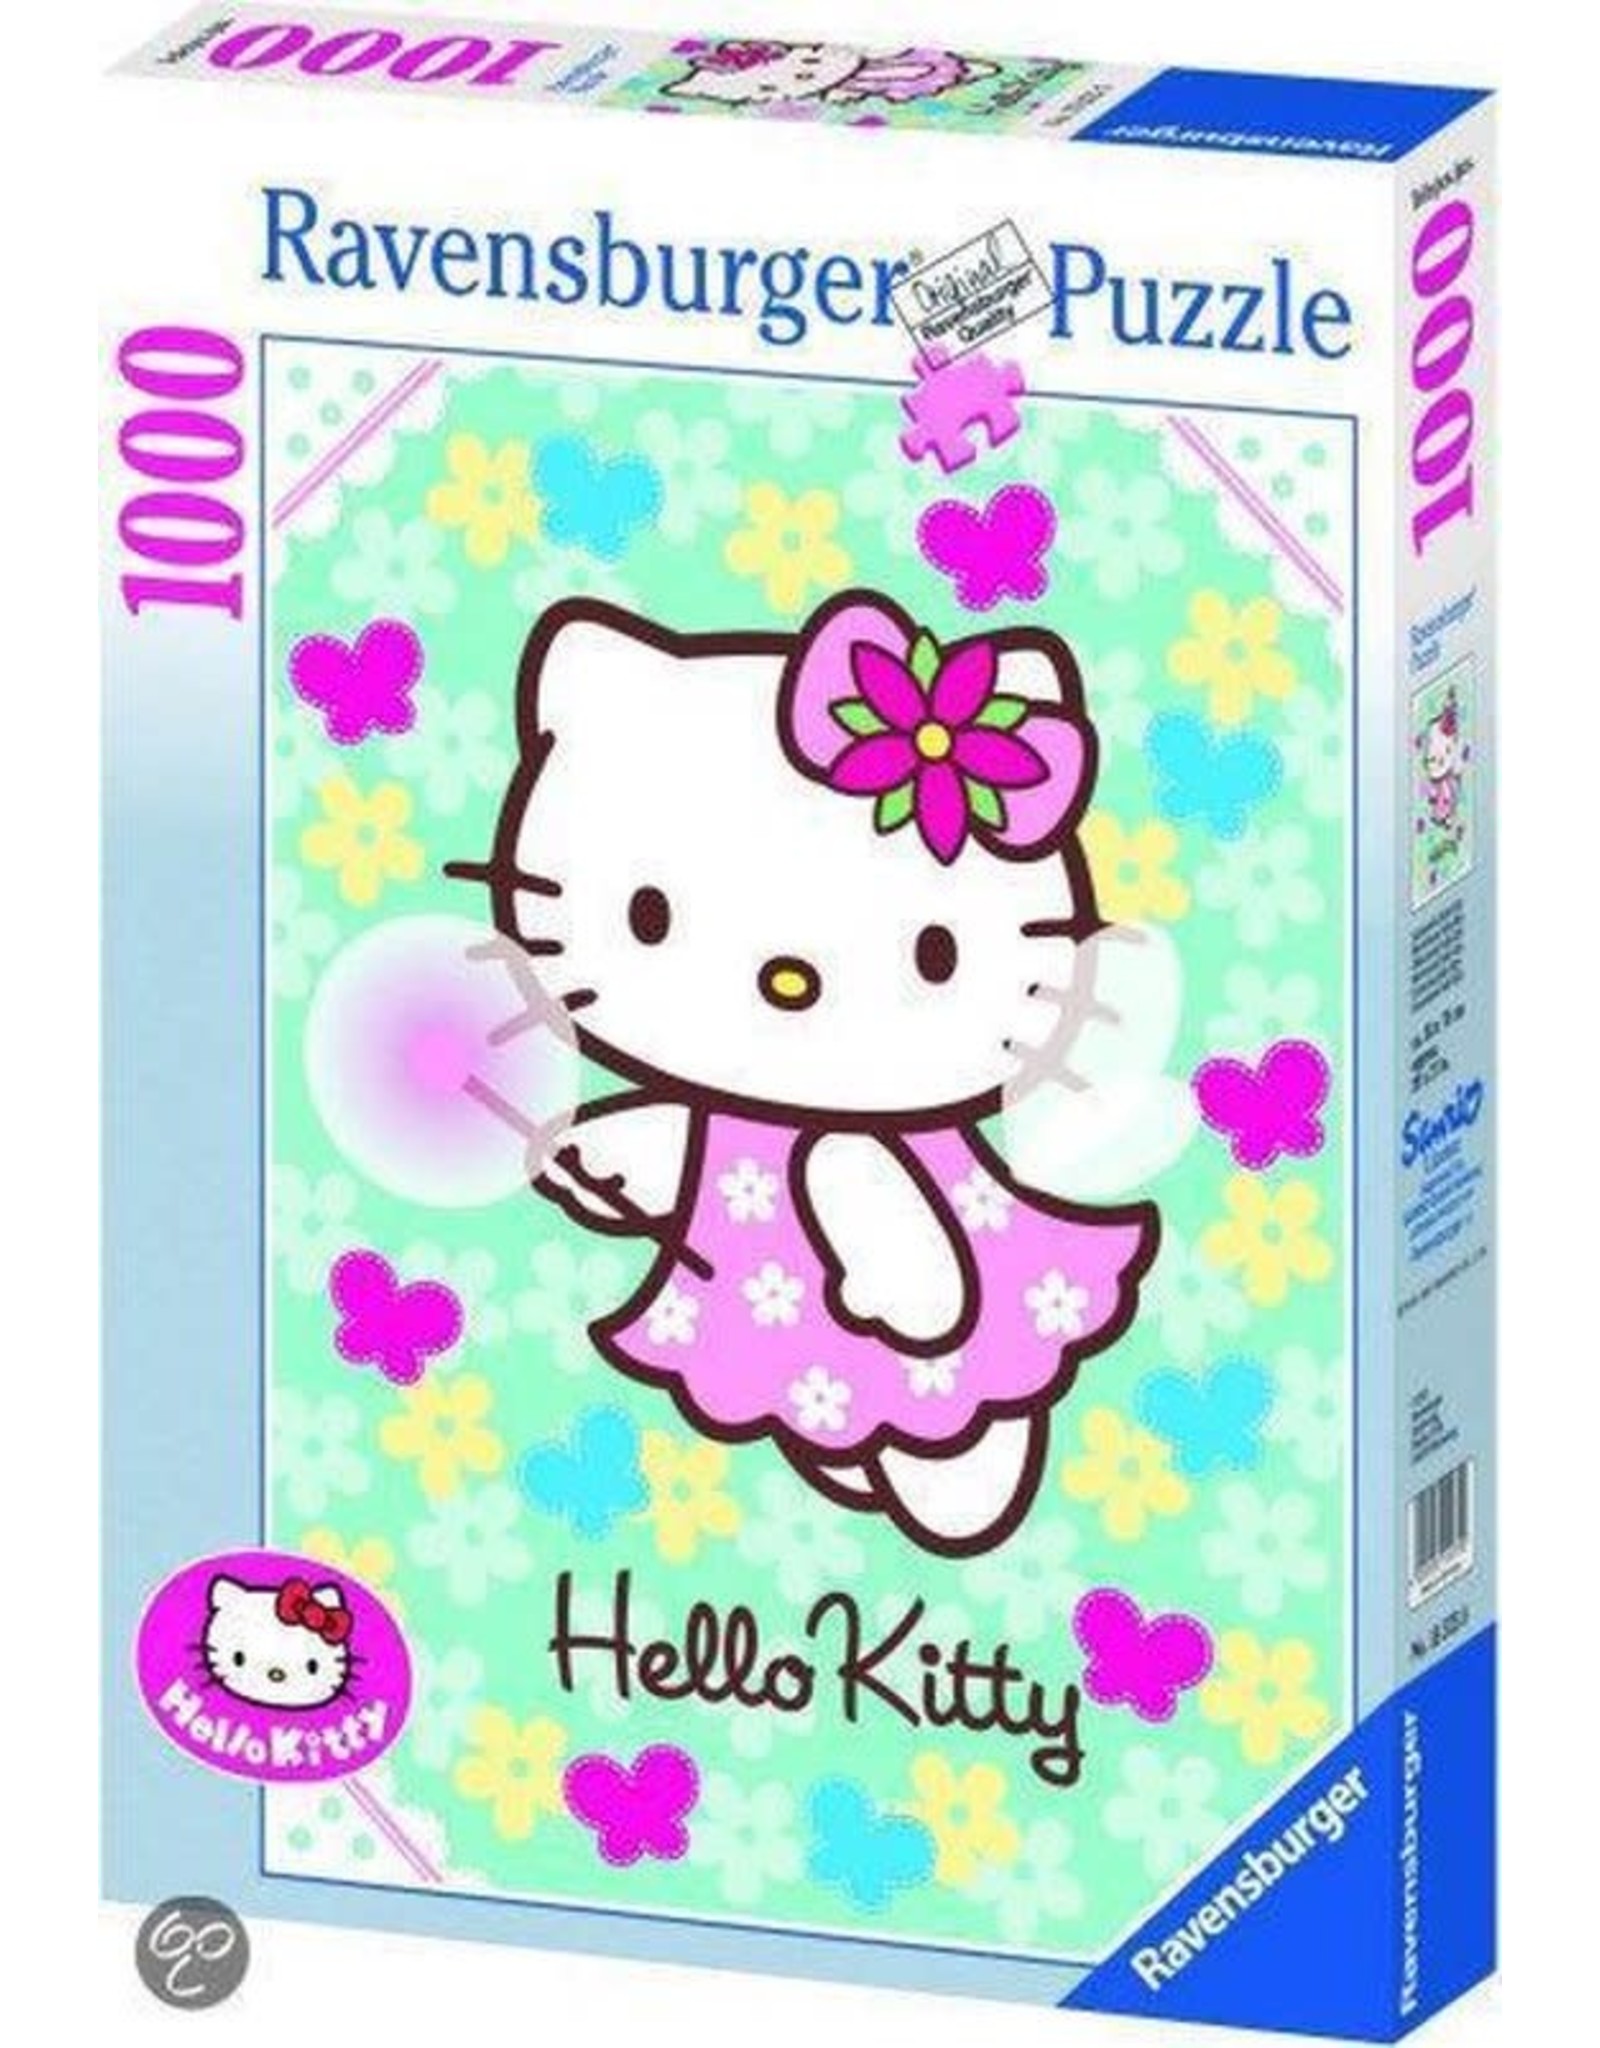 Ravensburger Ravensburger puzzel 155750 Hello Kitty 1000 stukjes